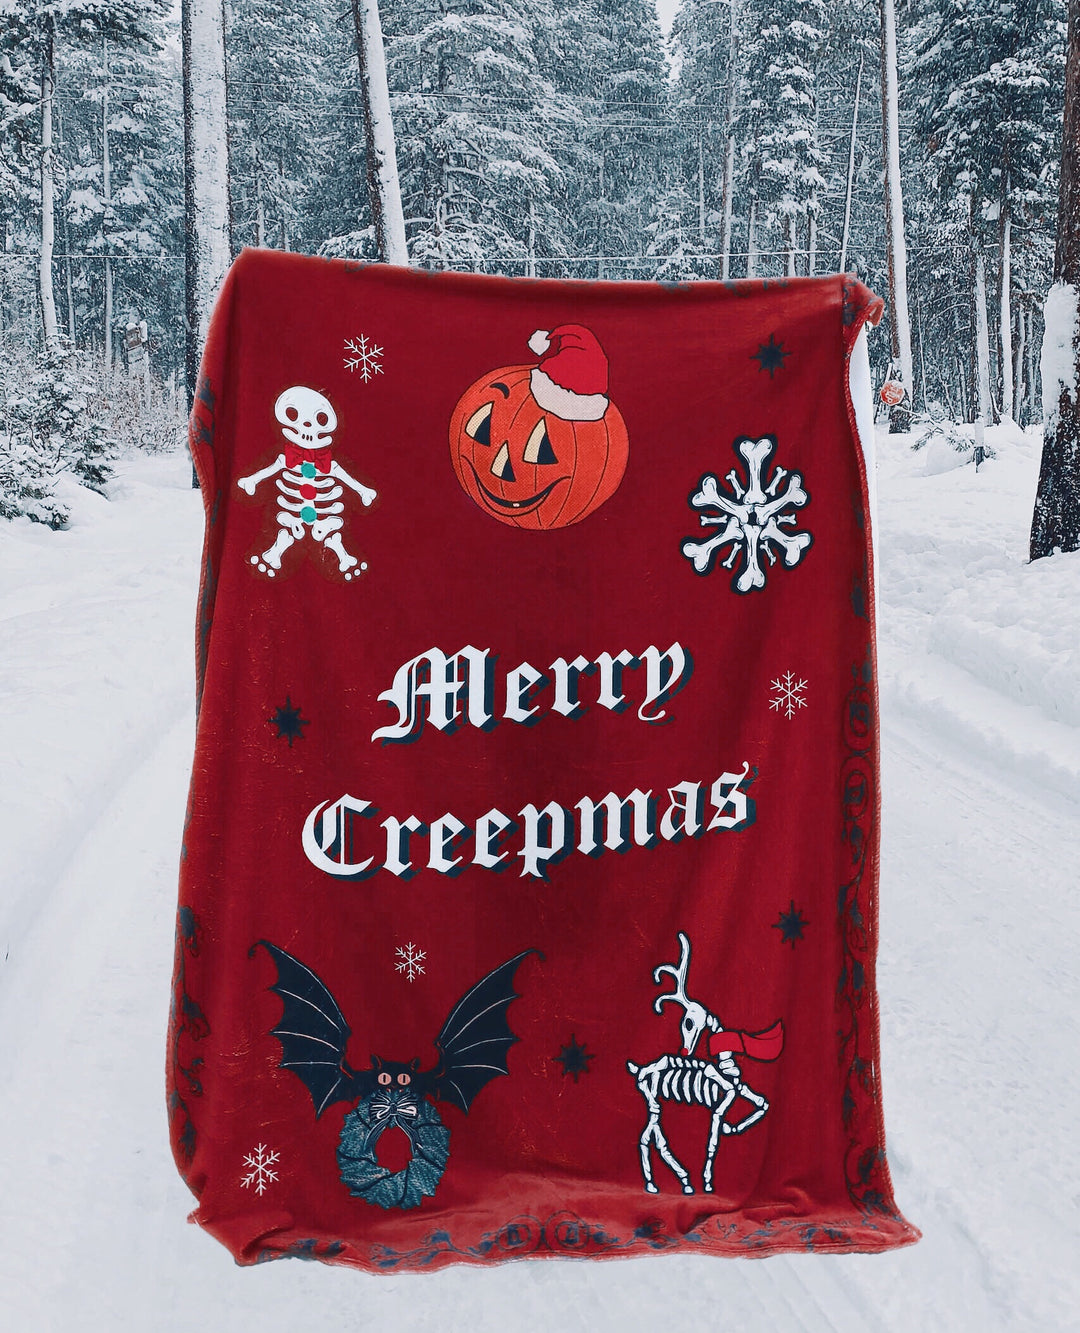 Merry Creepmas Fleece Blanket, Horror Blanket, Christmas Blanket